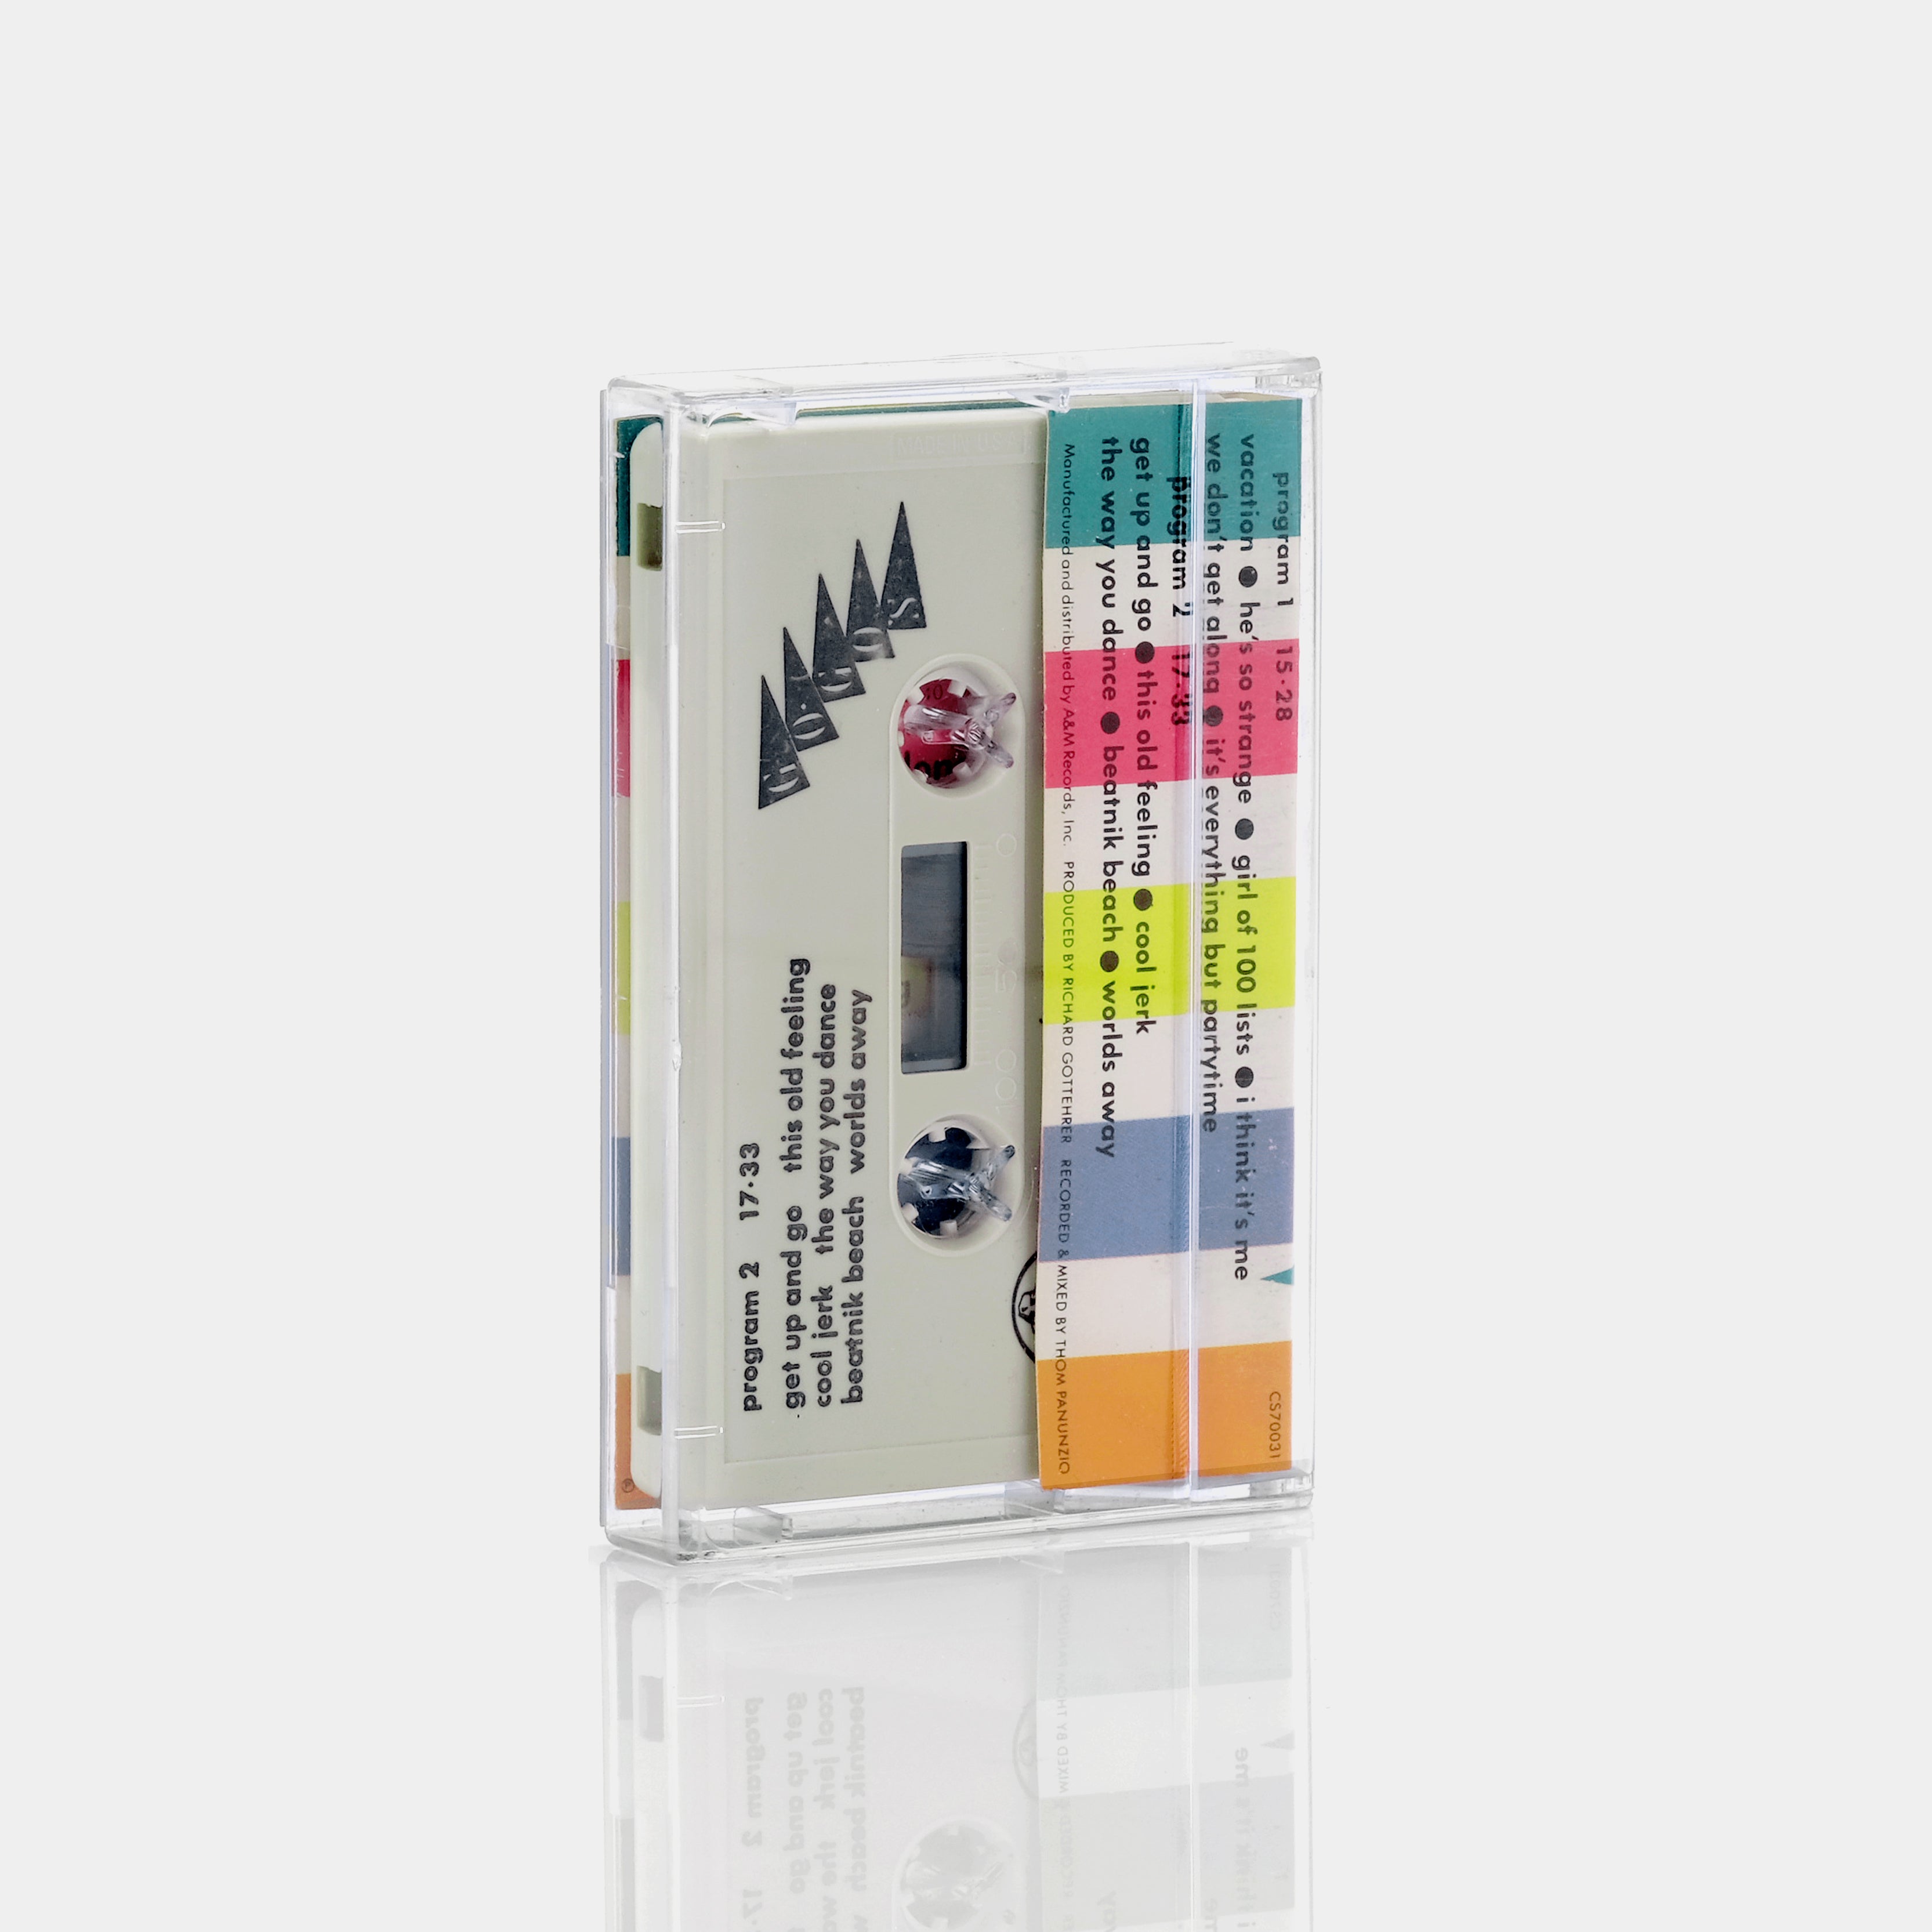 Go-Go's - Vacation Cassette Tape